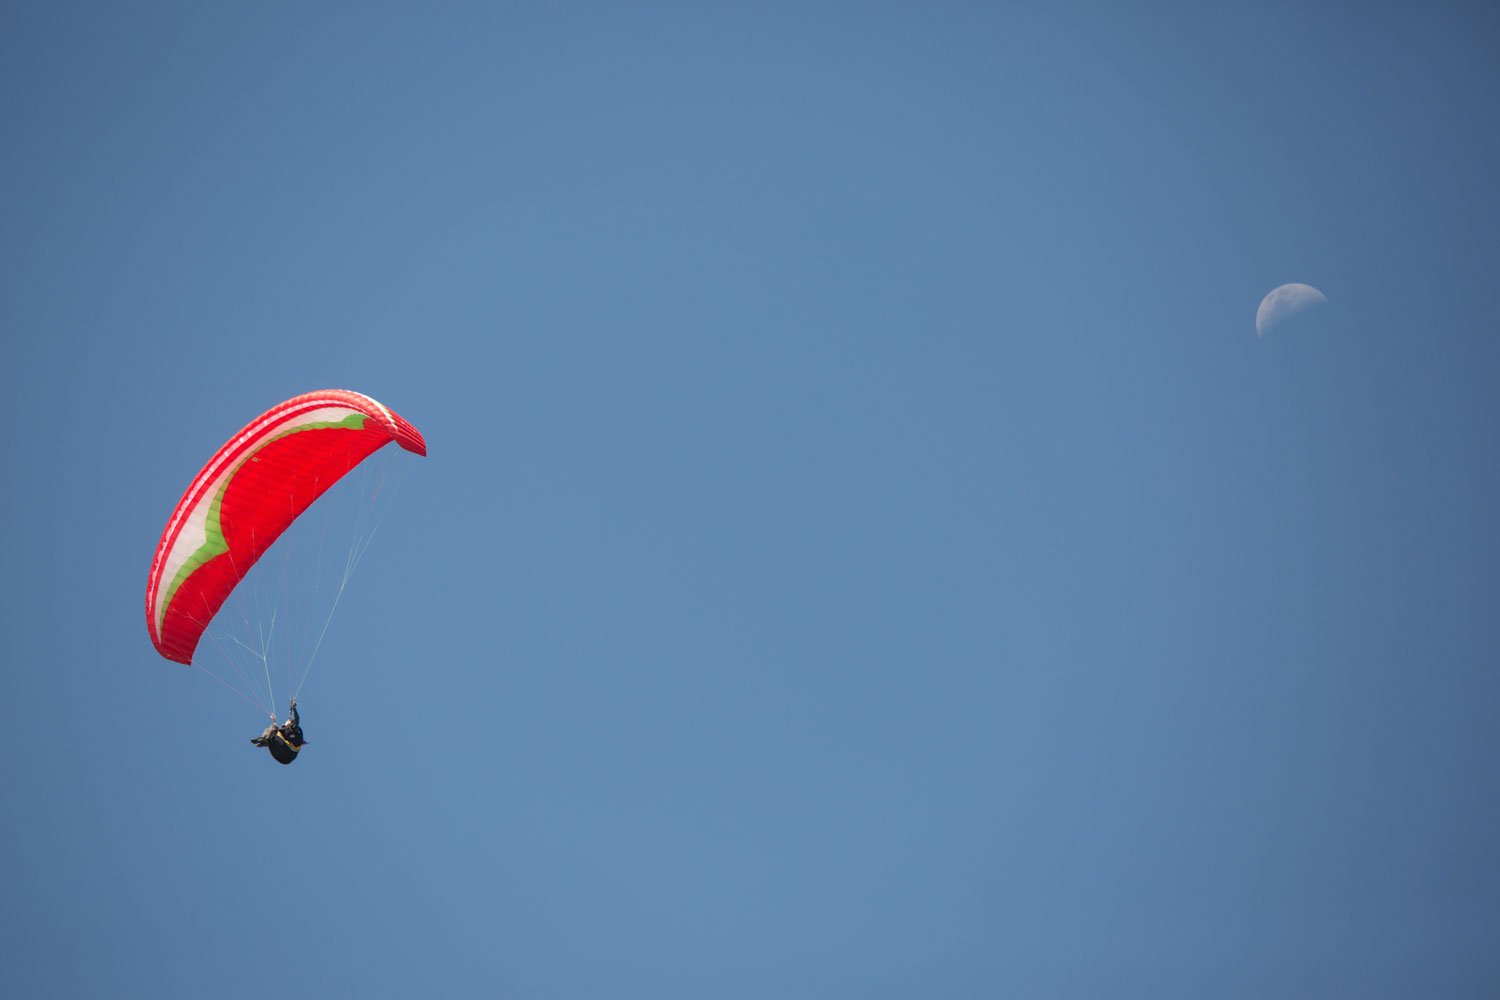 auckland castaways resort paraglider